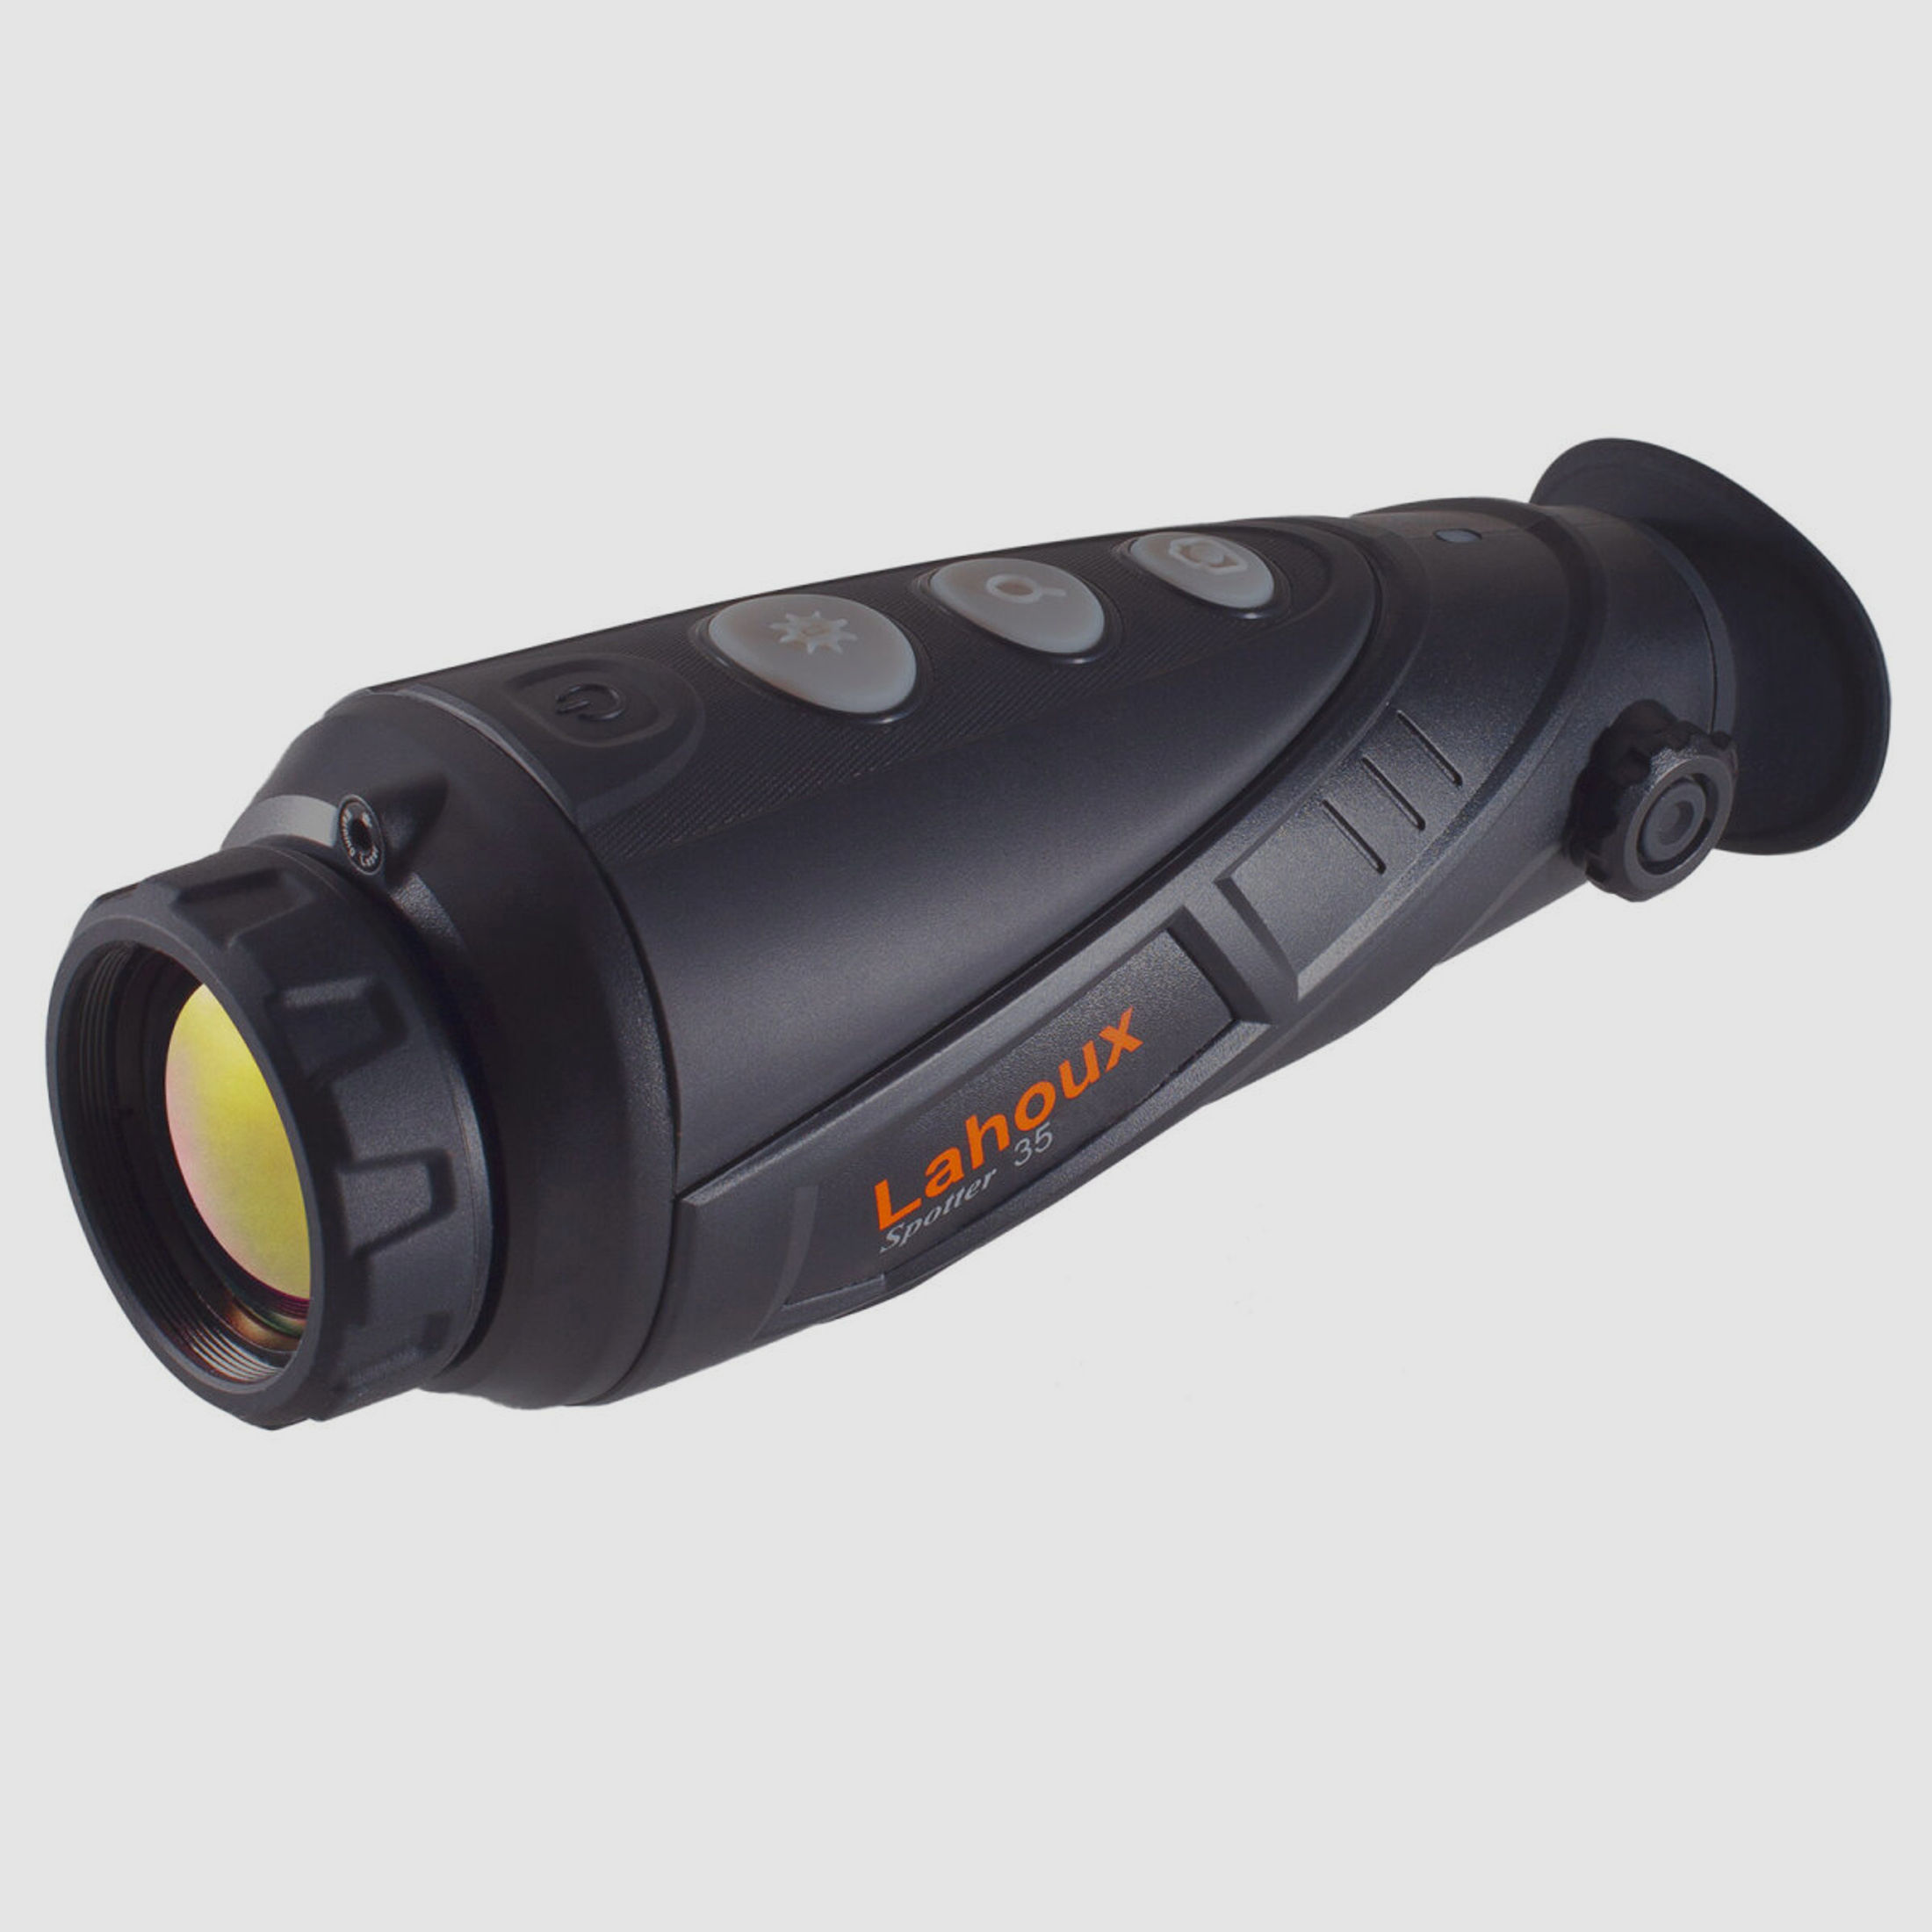 Lahoux Nachtsichtgerät Spotter 35 (Mod. 12 Micron)